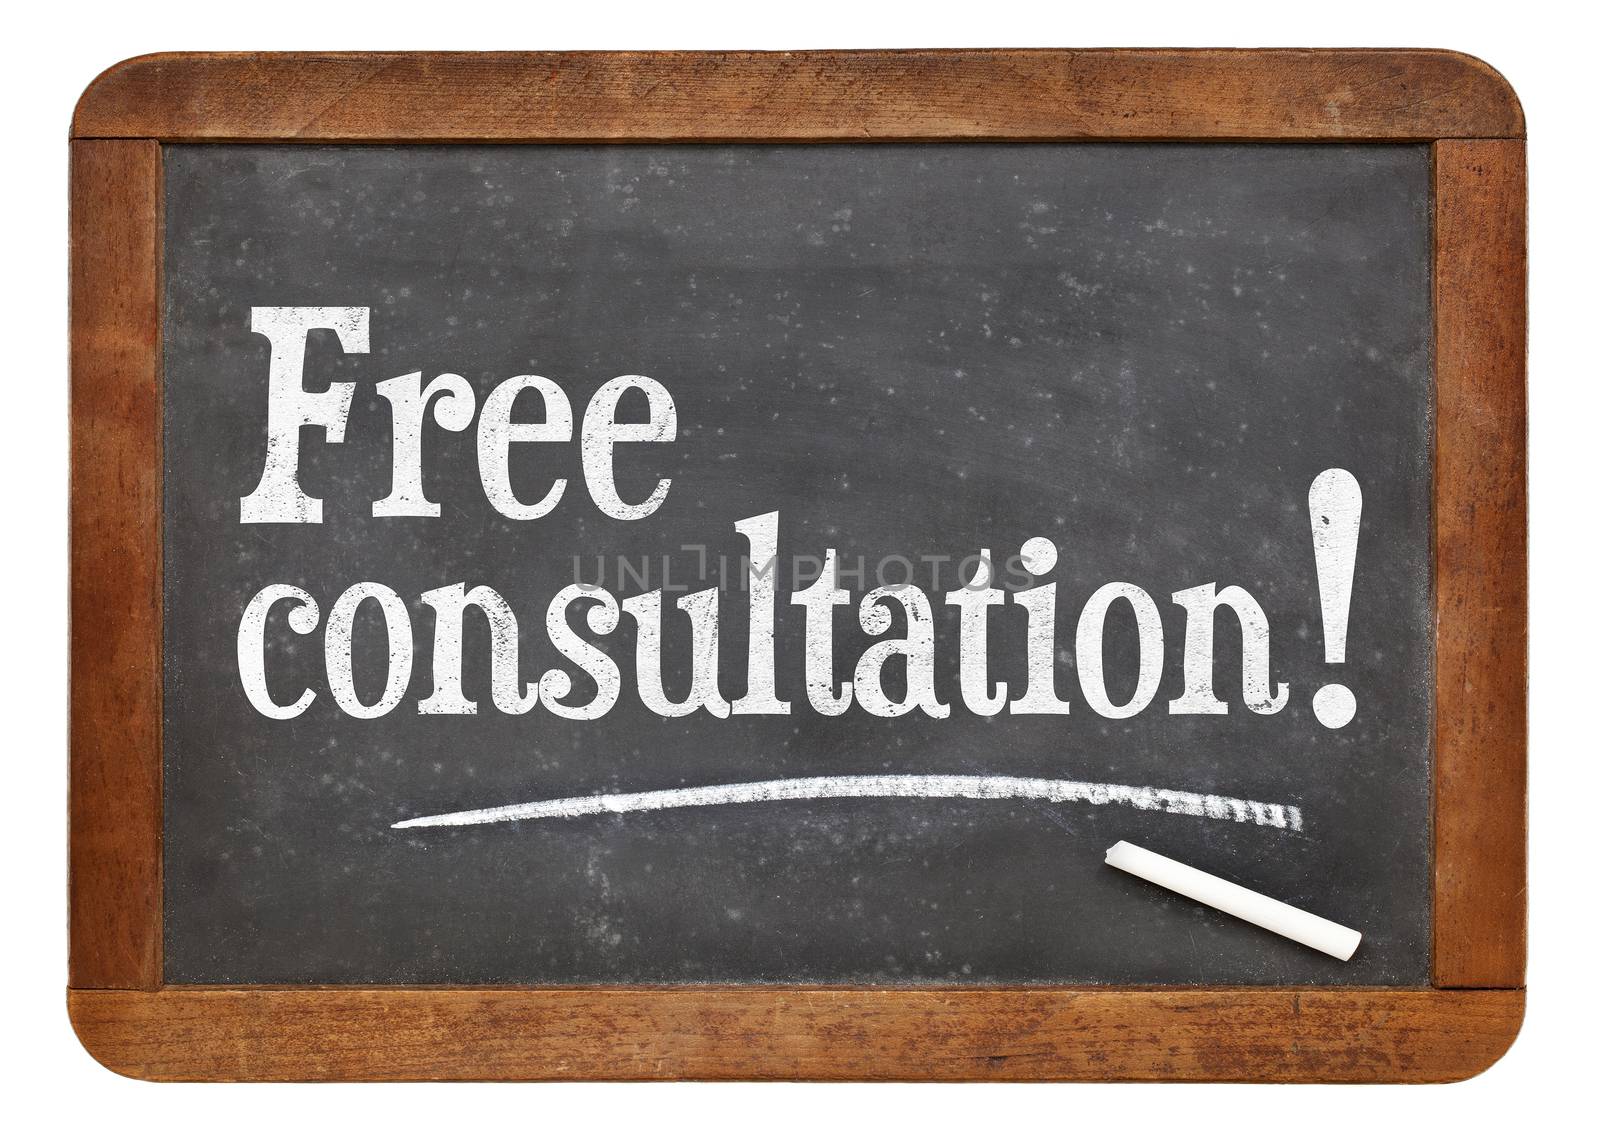 Free consultation blackboard sign by PixelsAway